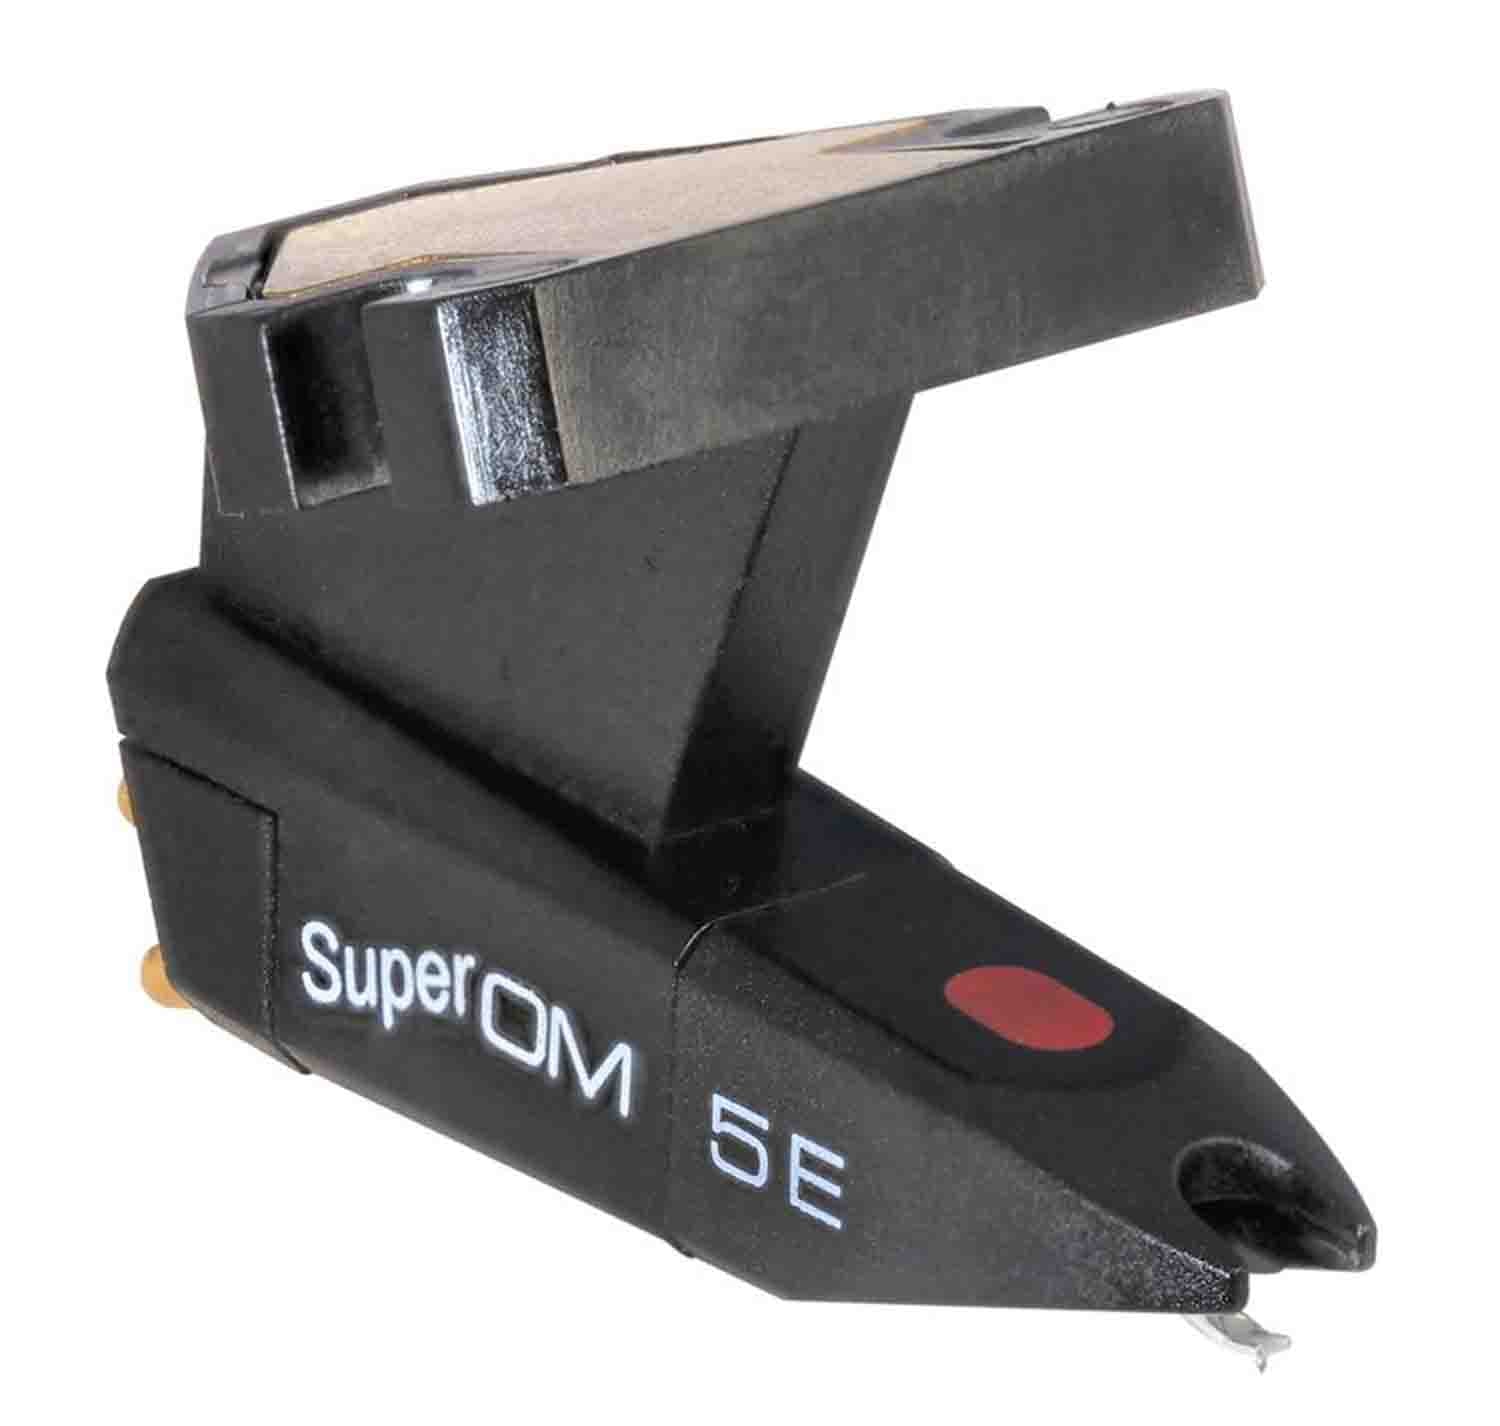 Ortofon Super OM 5e Turntable Cartridge with Elliptical Stylus Ortofon